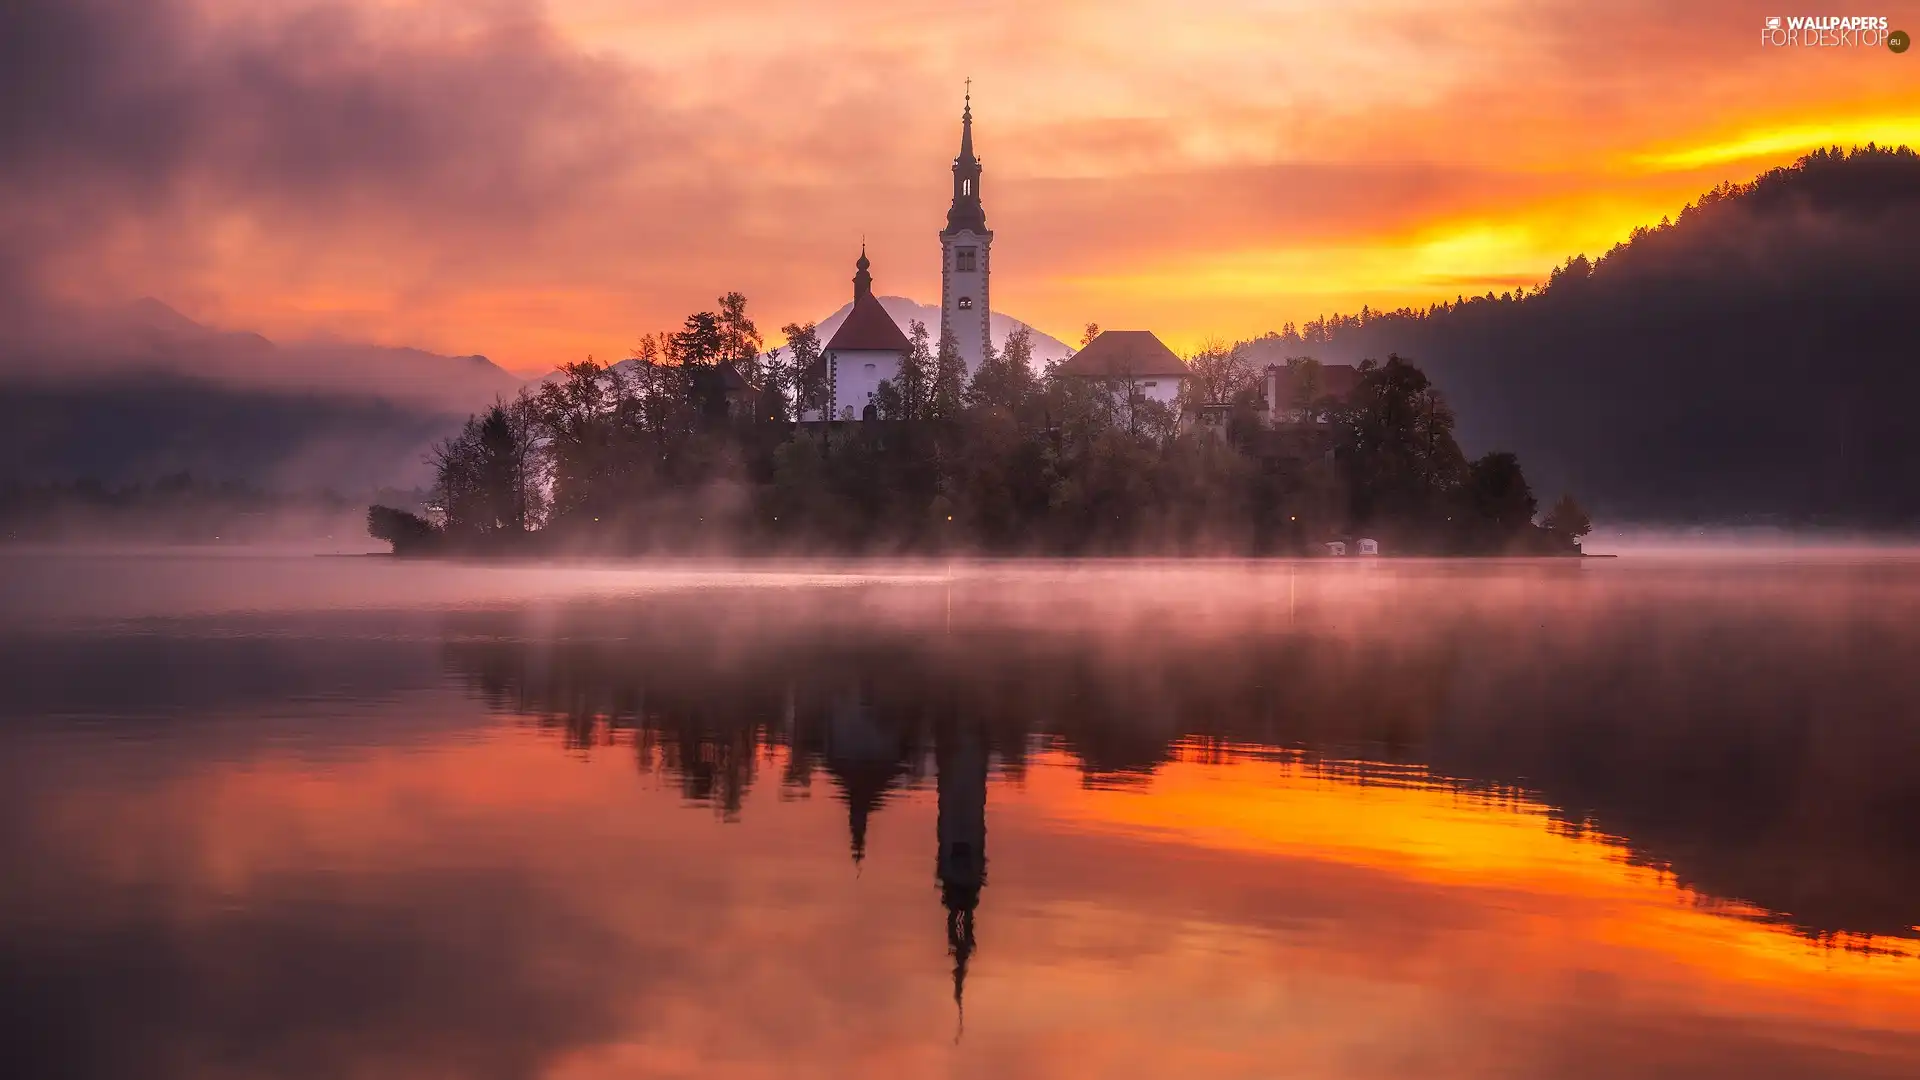 Lake Bled, Slovenia, Blejski Otok Island, Church of the Annunciation of the Virgin Mary, reflection, Fog, Julian Alps, Great Sunsets, Mountains